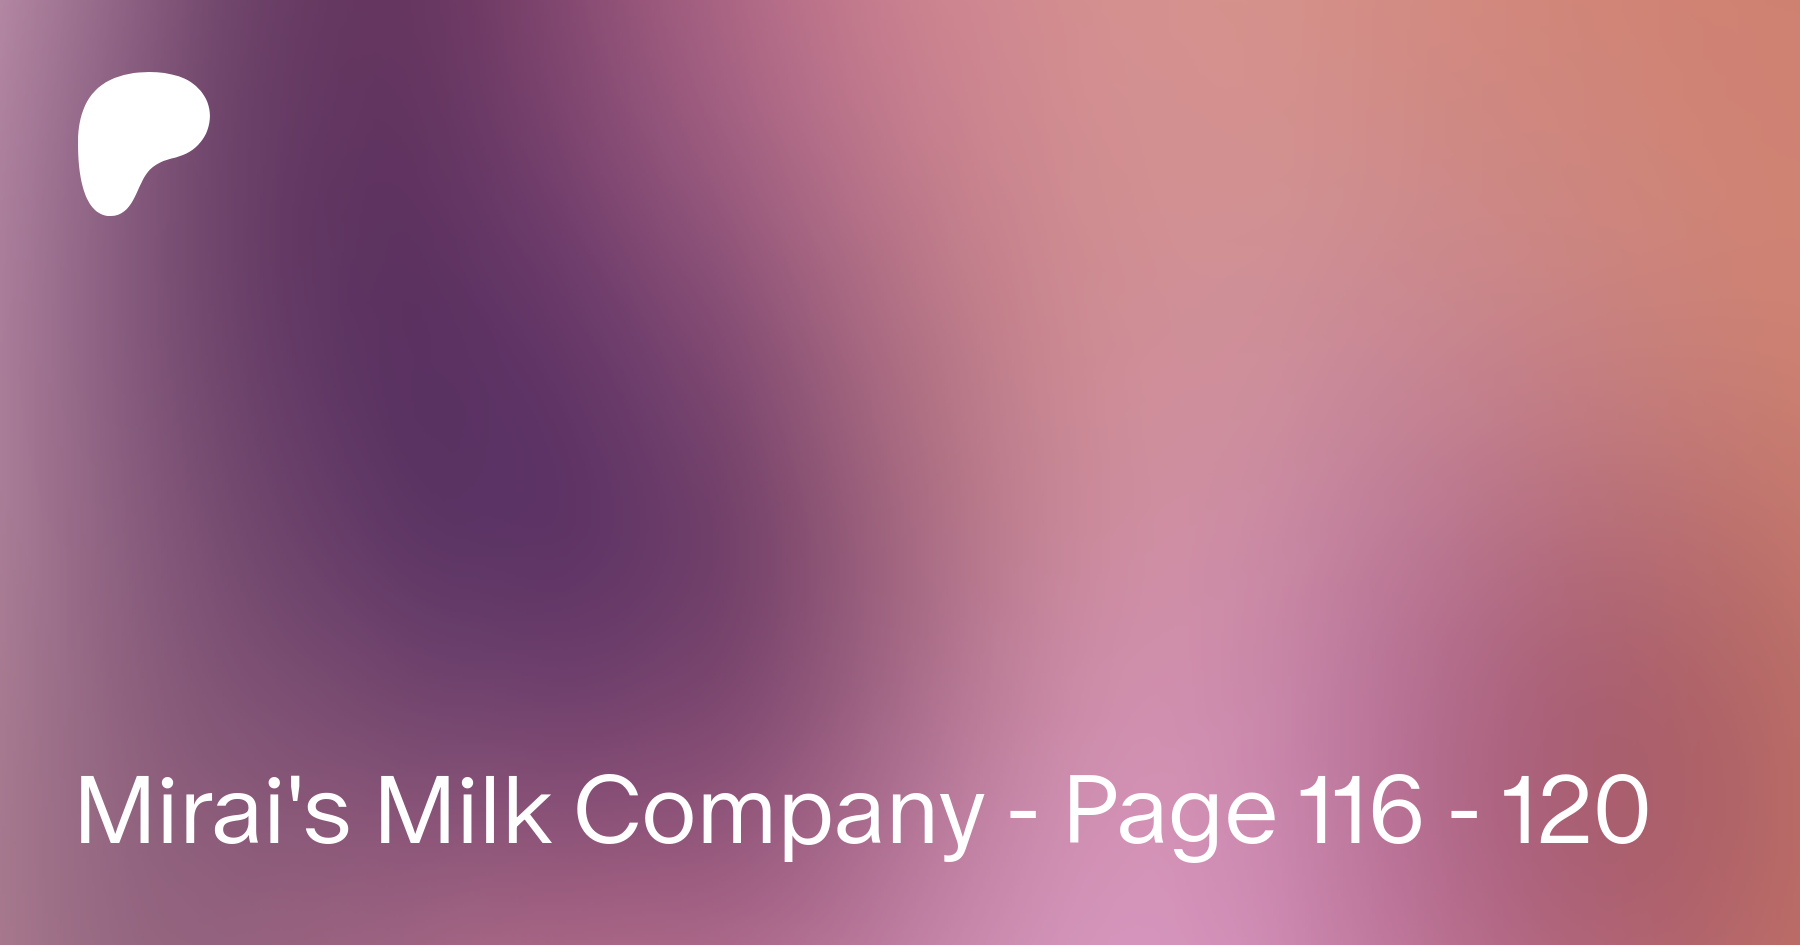 Mirais milk company